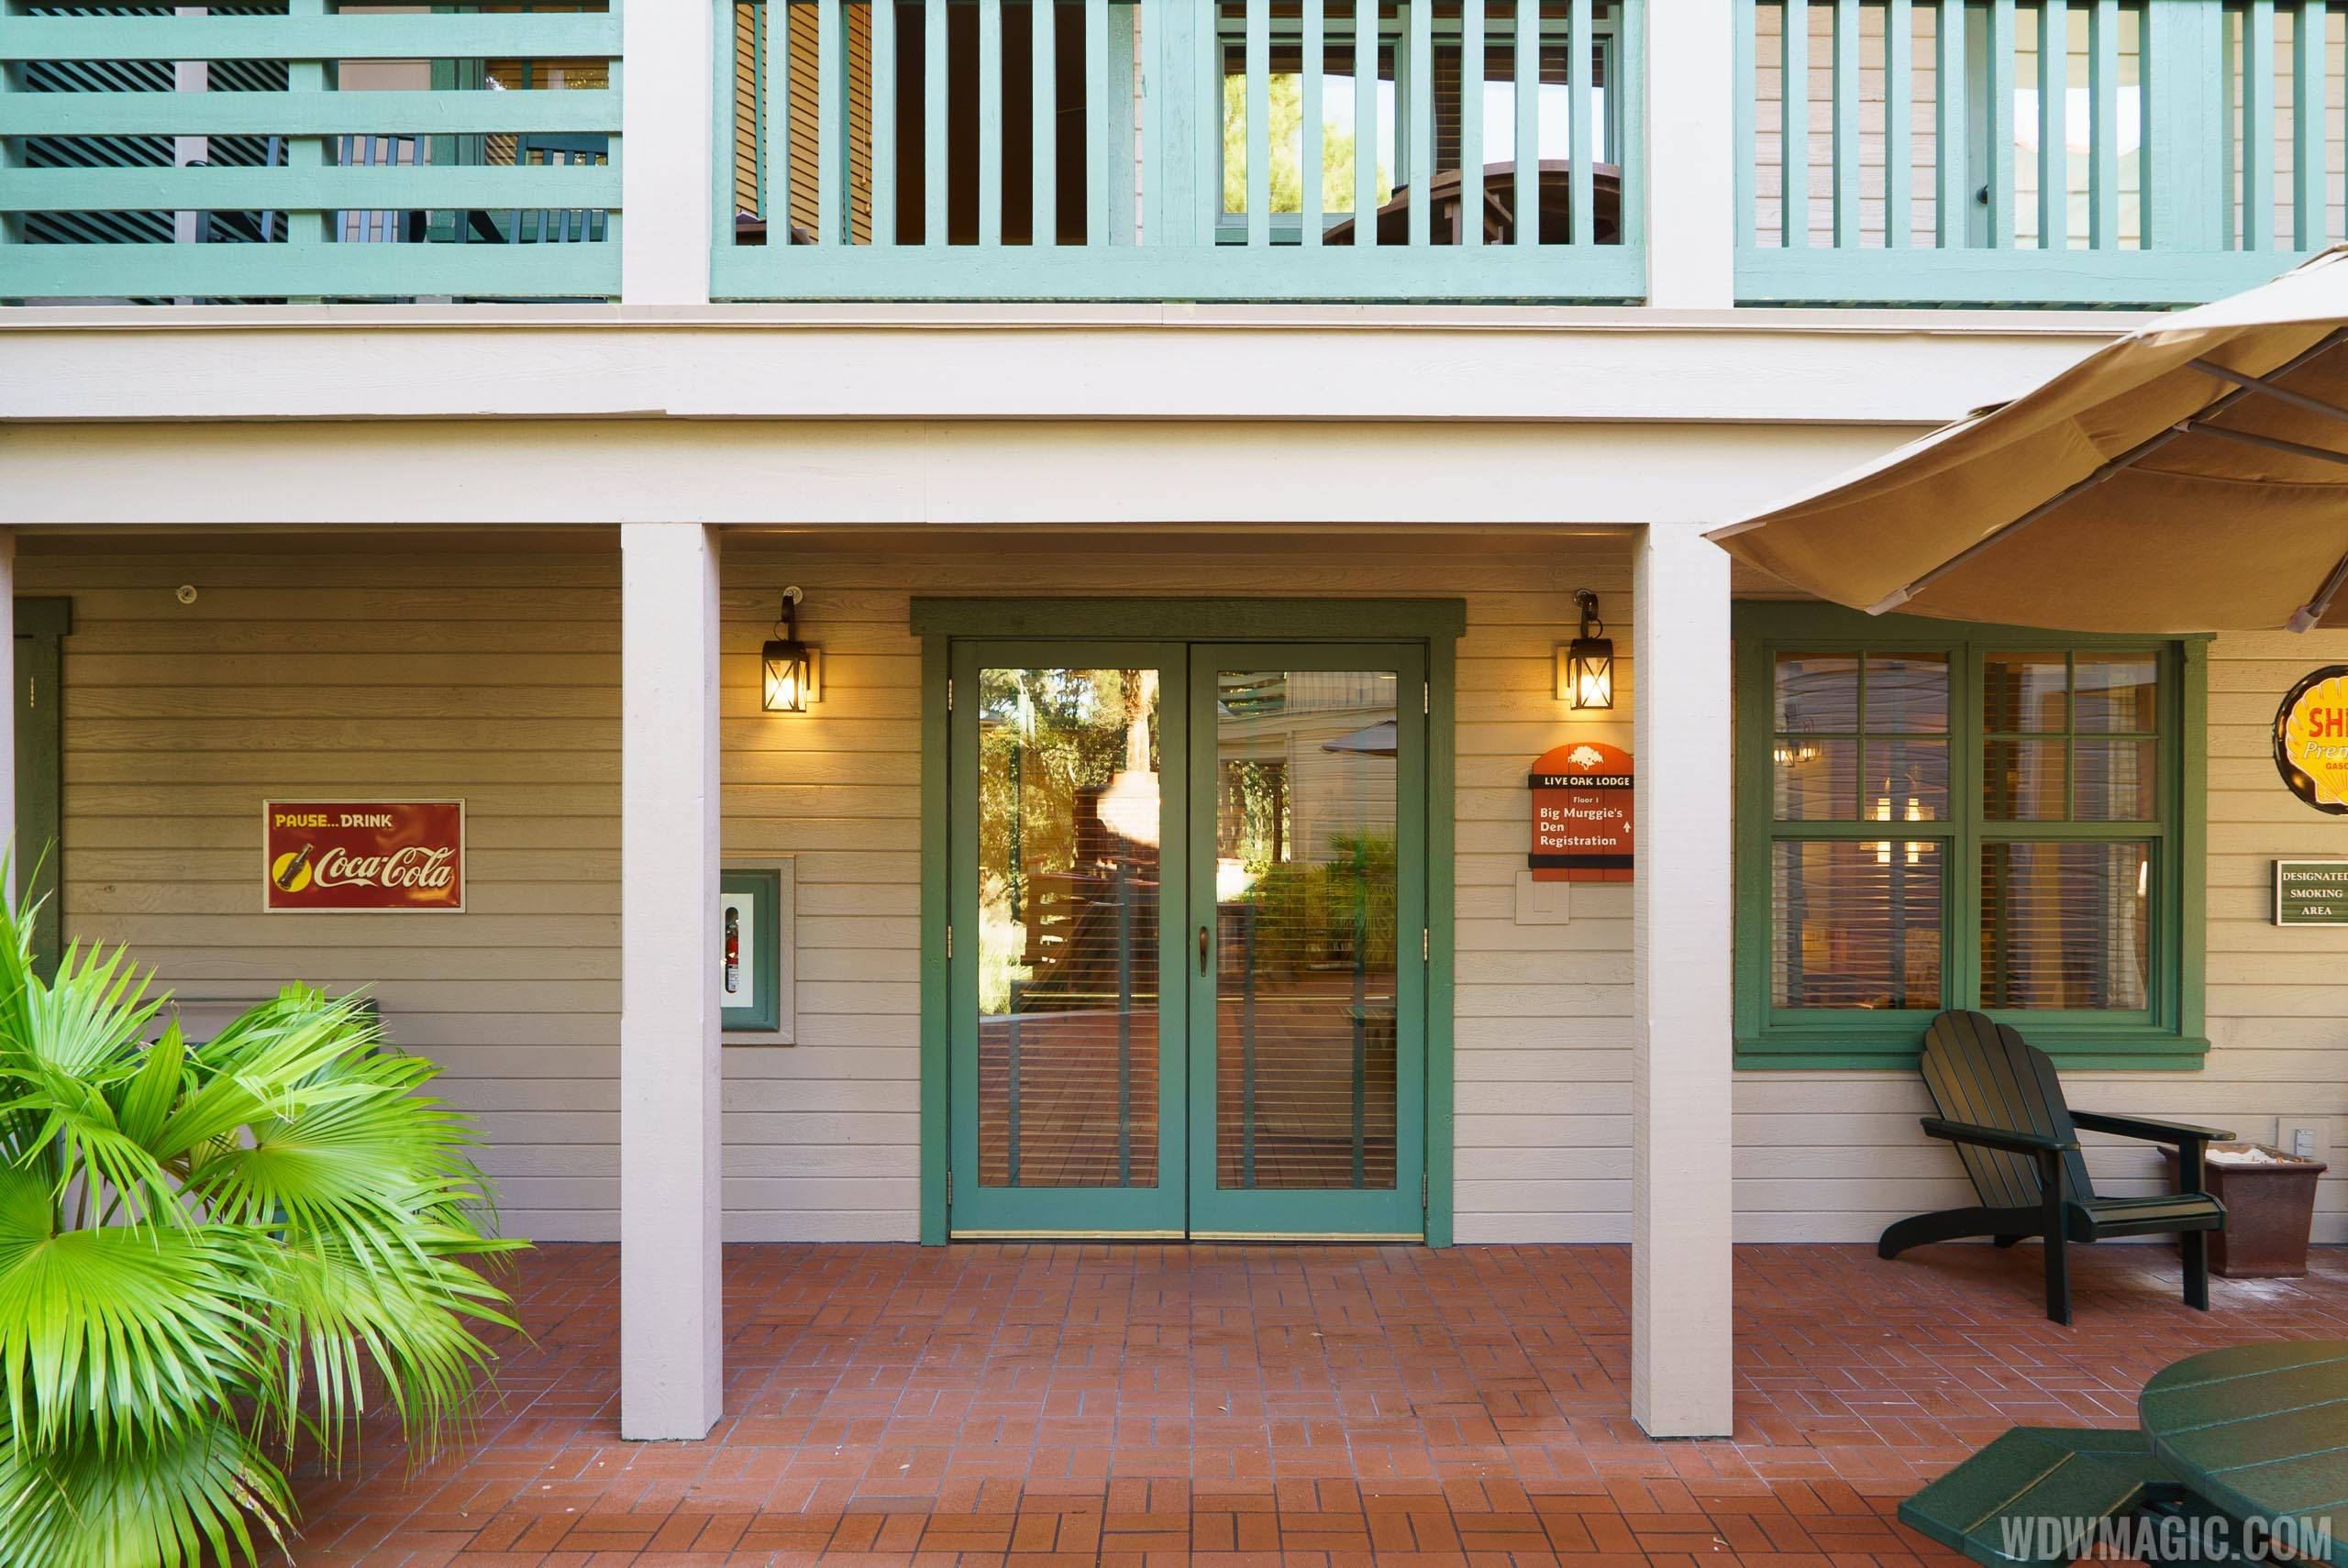 Disney's Hilton Head Island Resort - The Live Oak Lodge entrance